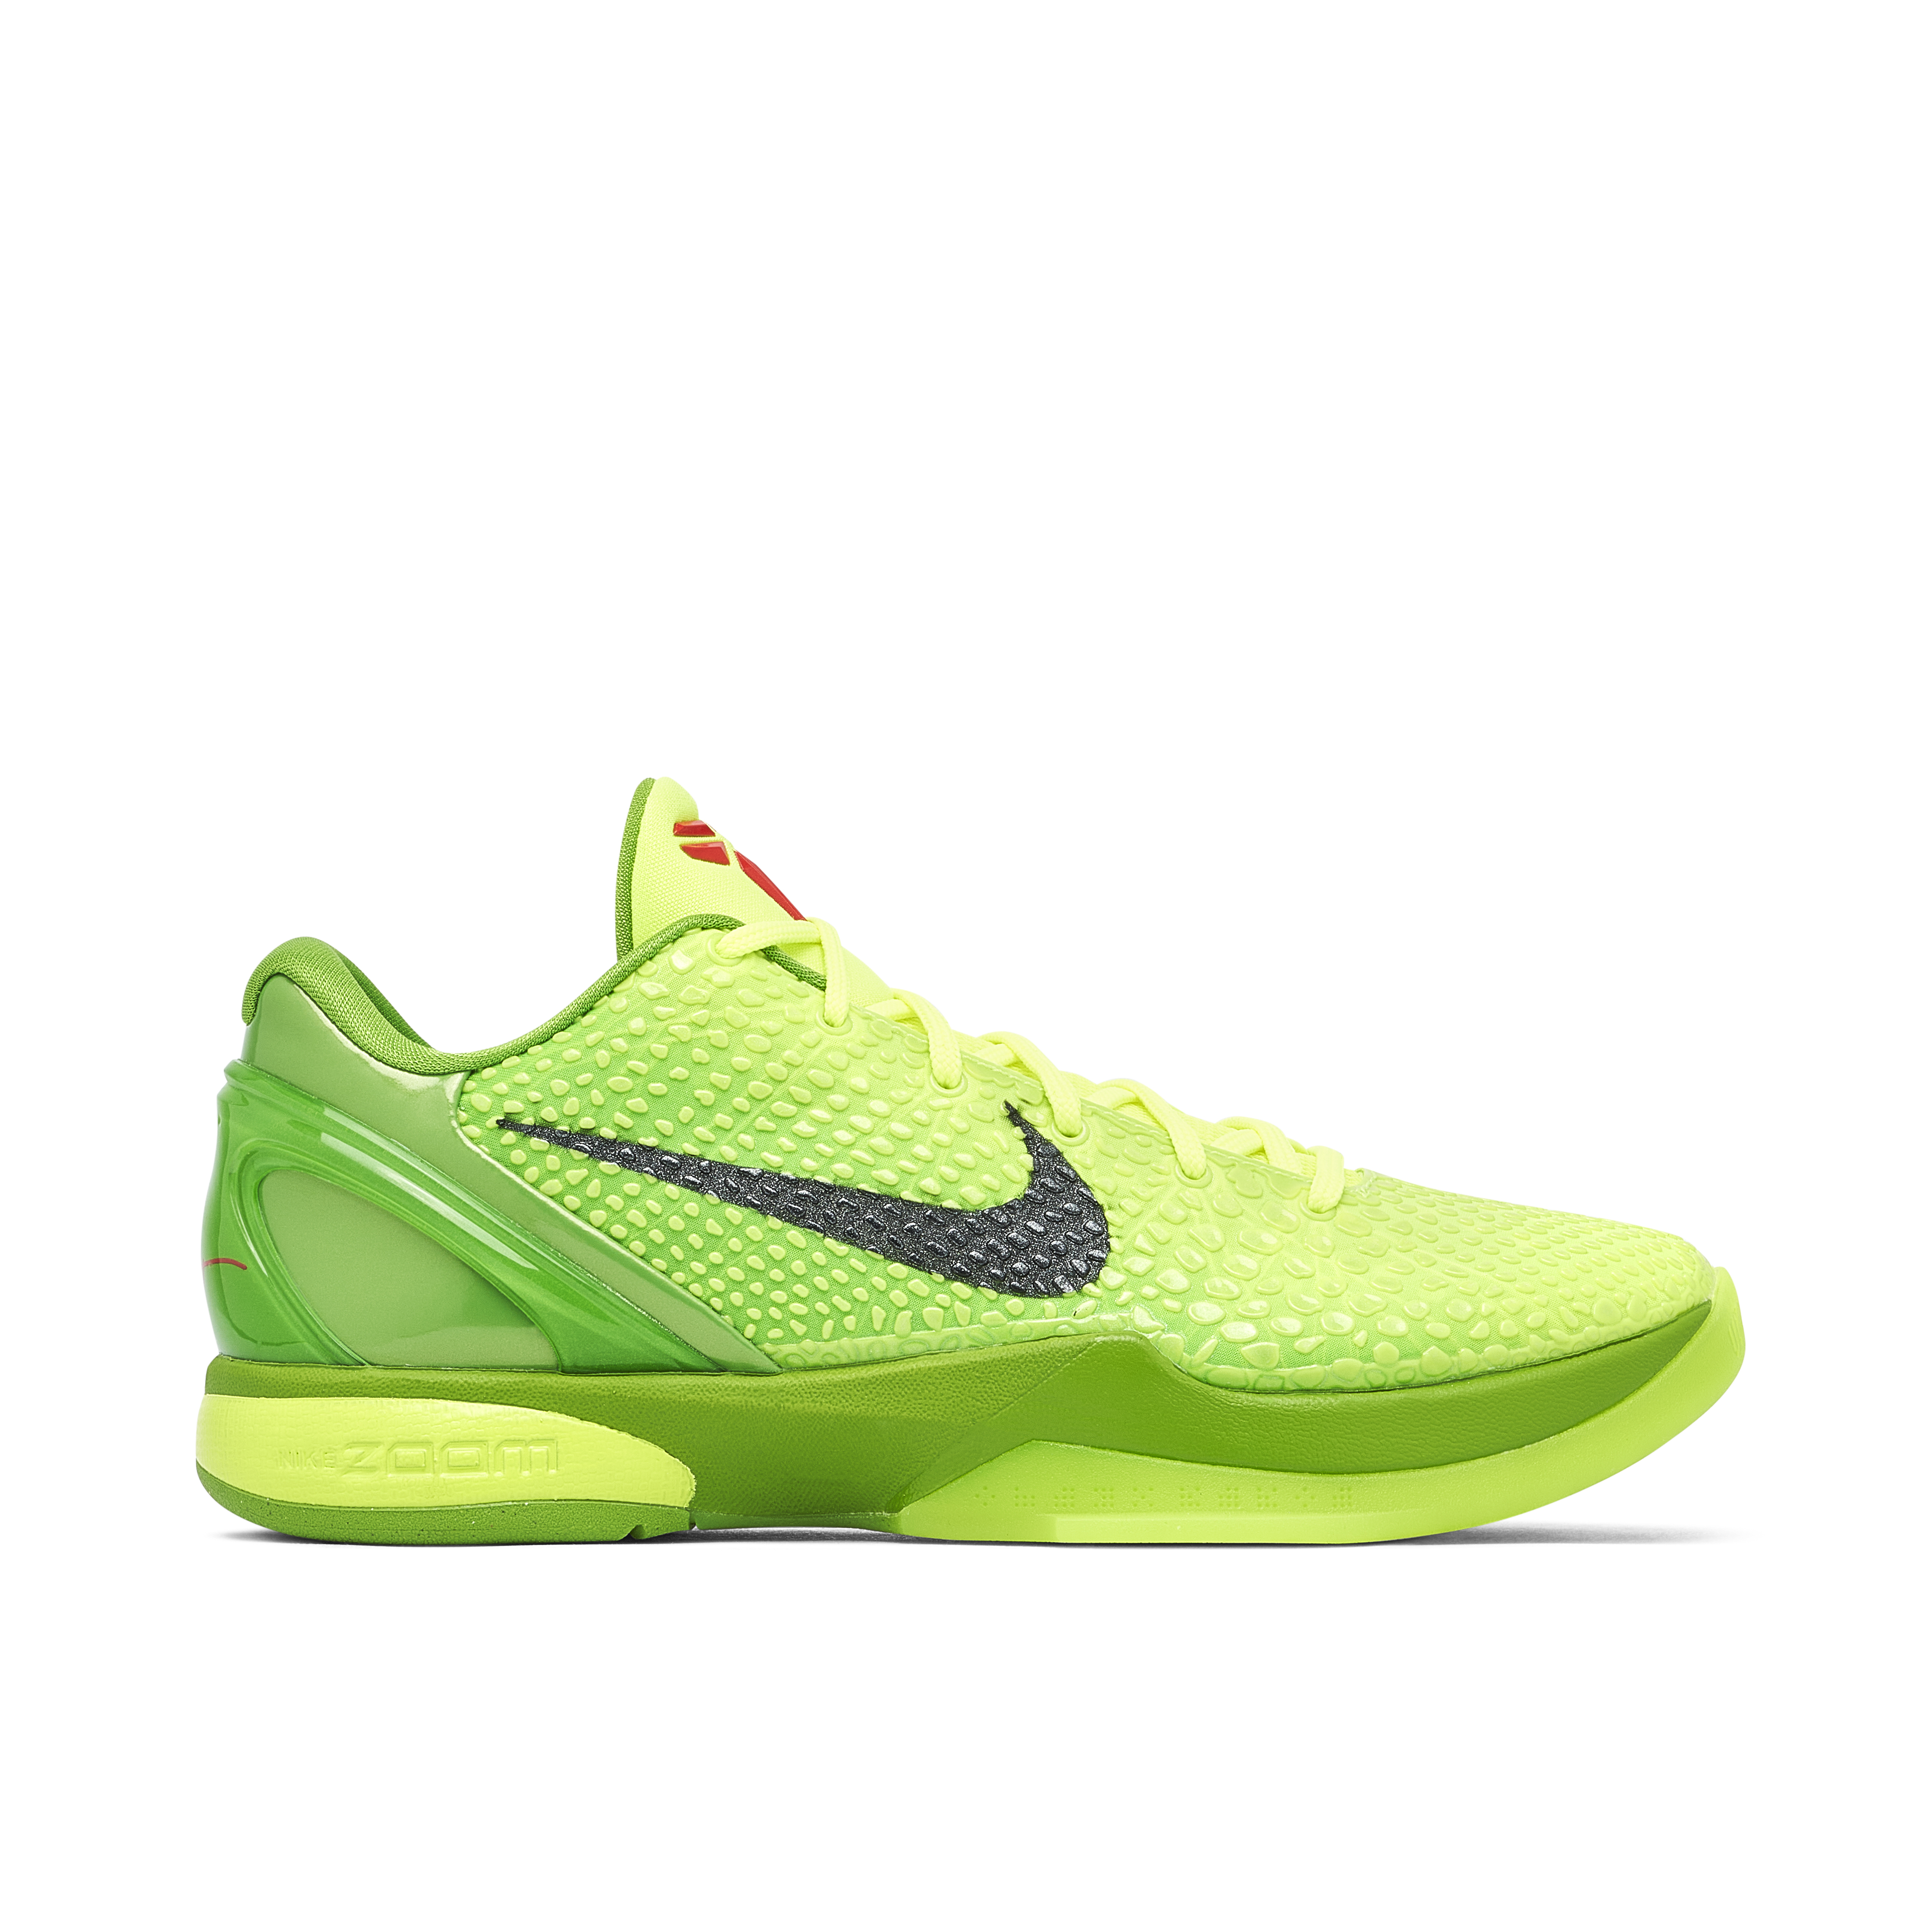  Nike Mens Kobe 6 Protro CW2190 300 Grinch - Size 5